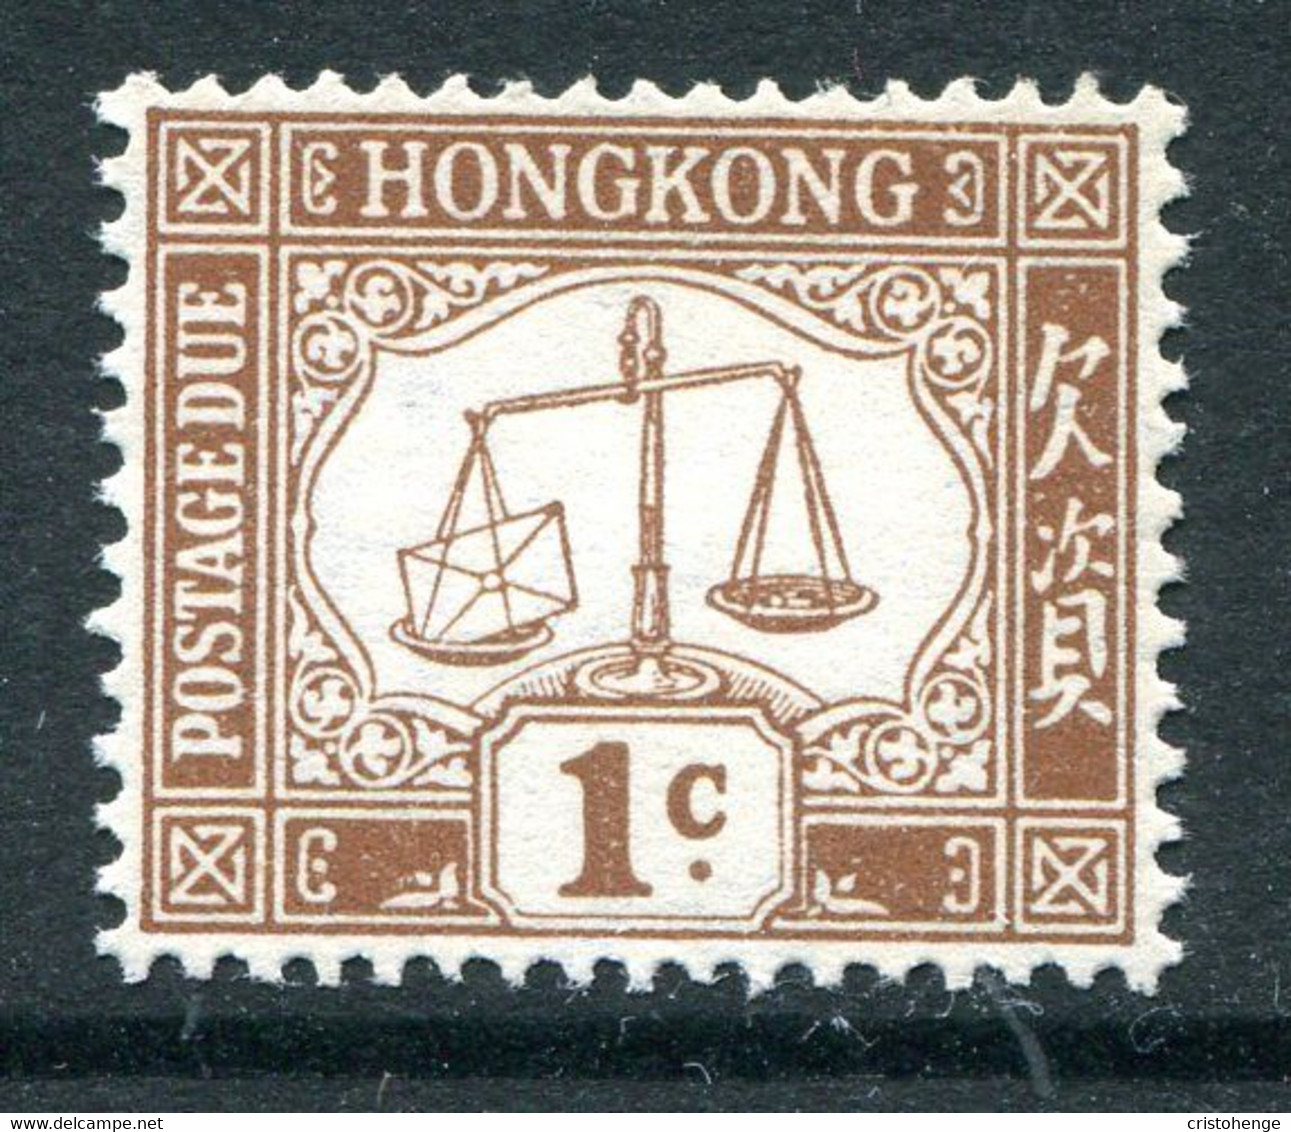 Hong Kong 1923-56 Postage Dues - 1c Brown - Wmk. Sideways - MNH (SG D1a) - Impuestos